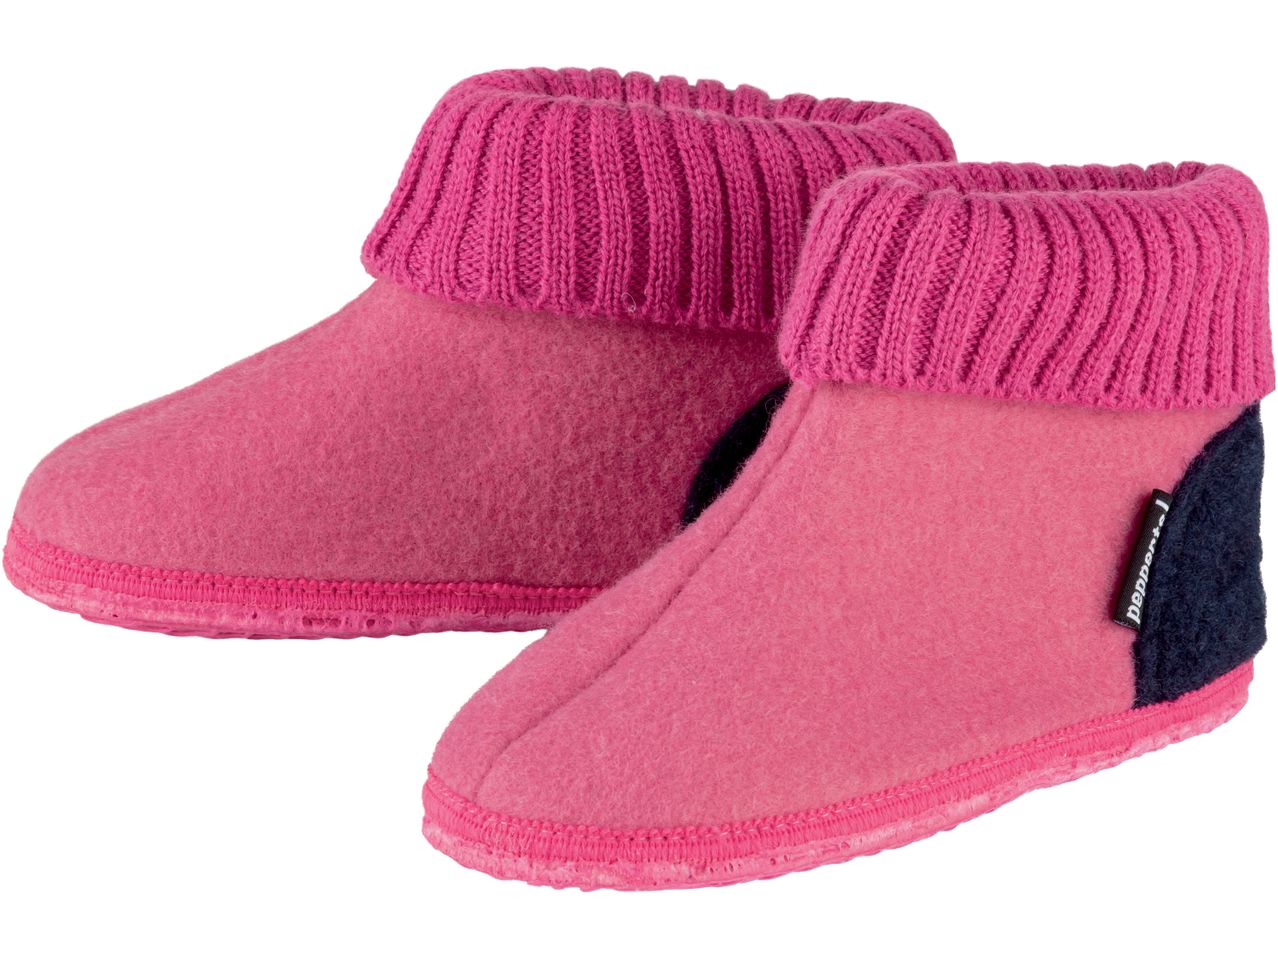 Pantofole in feltro per bambini , prezzo 6.99 EUR